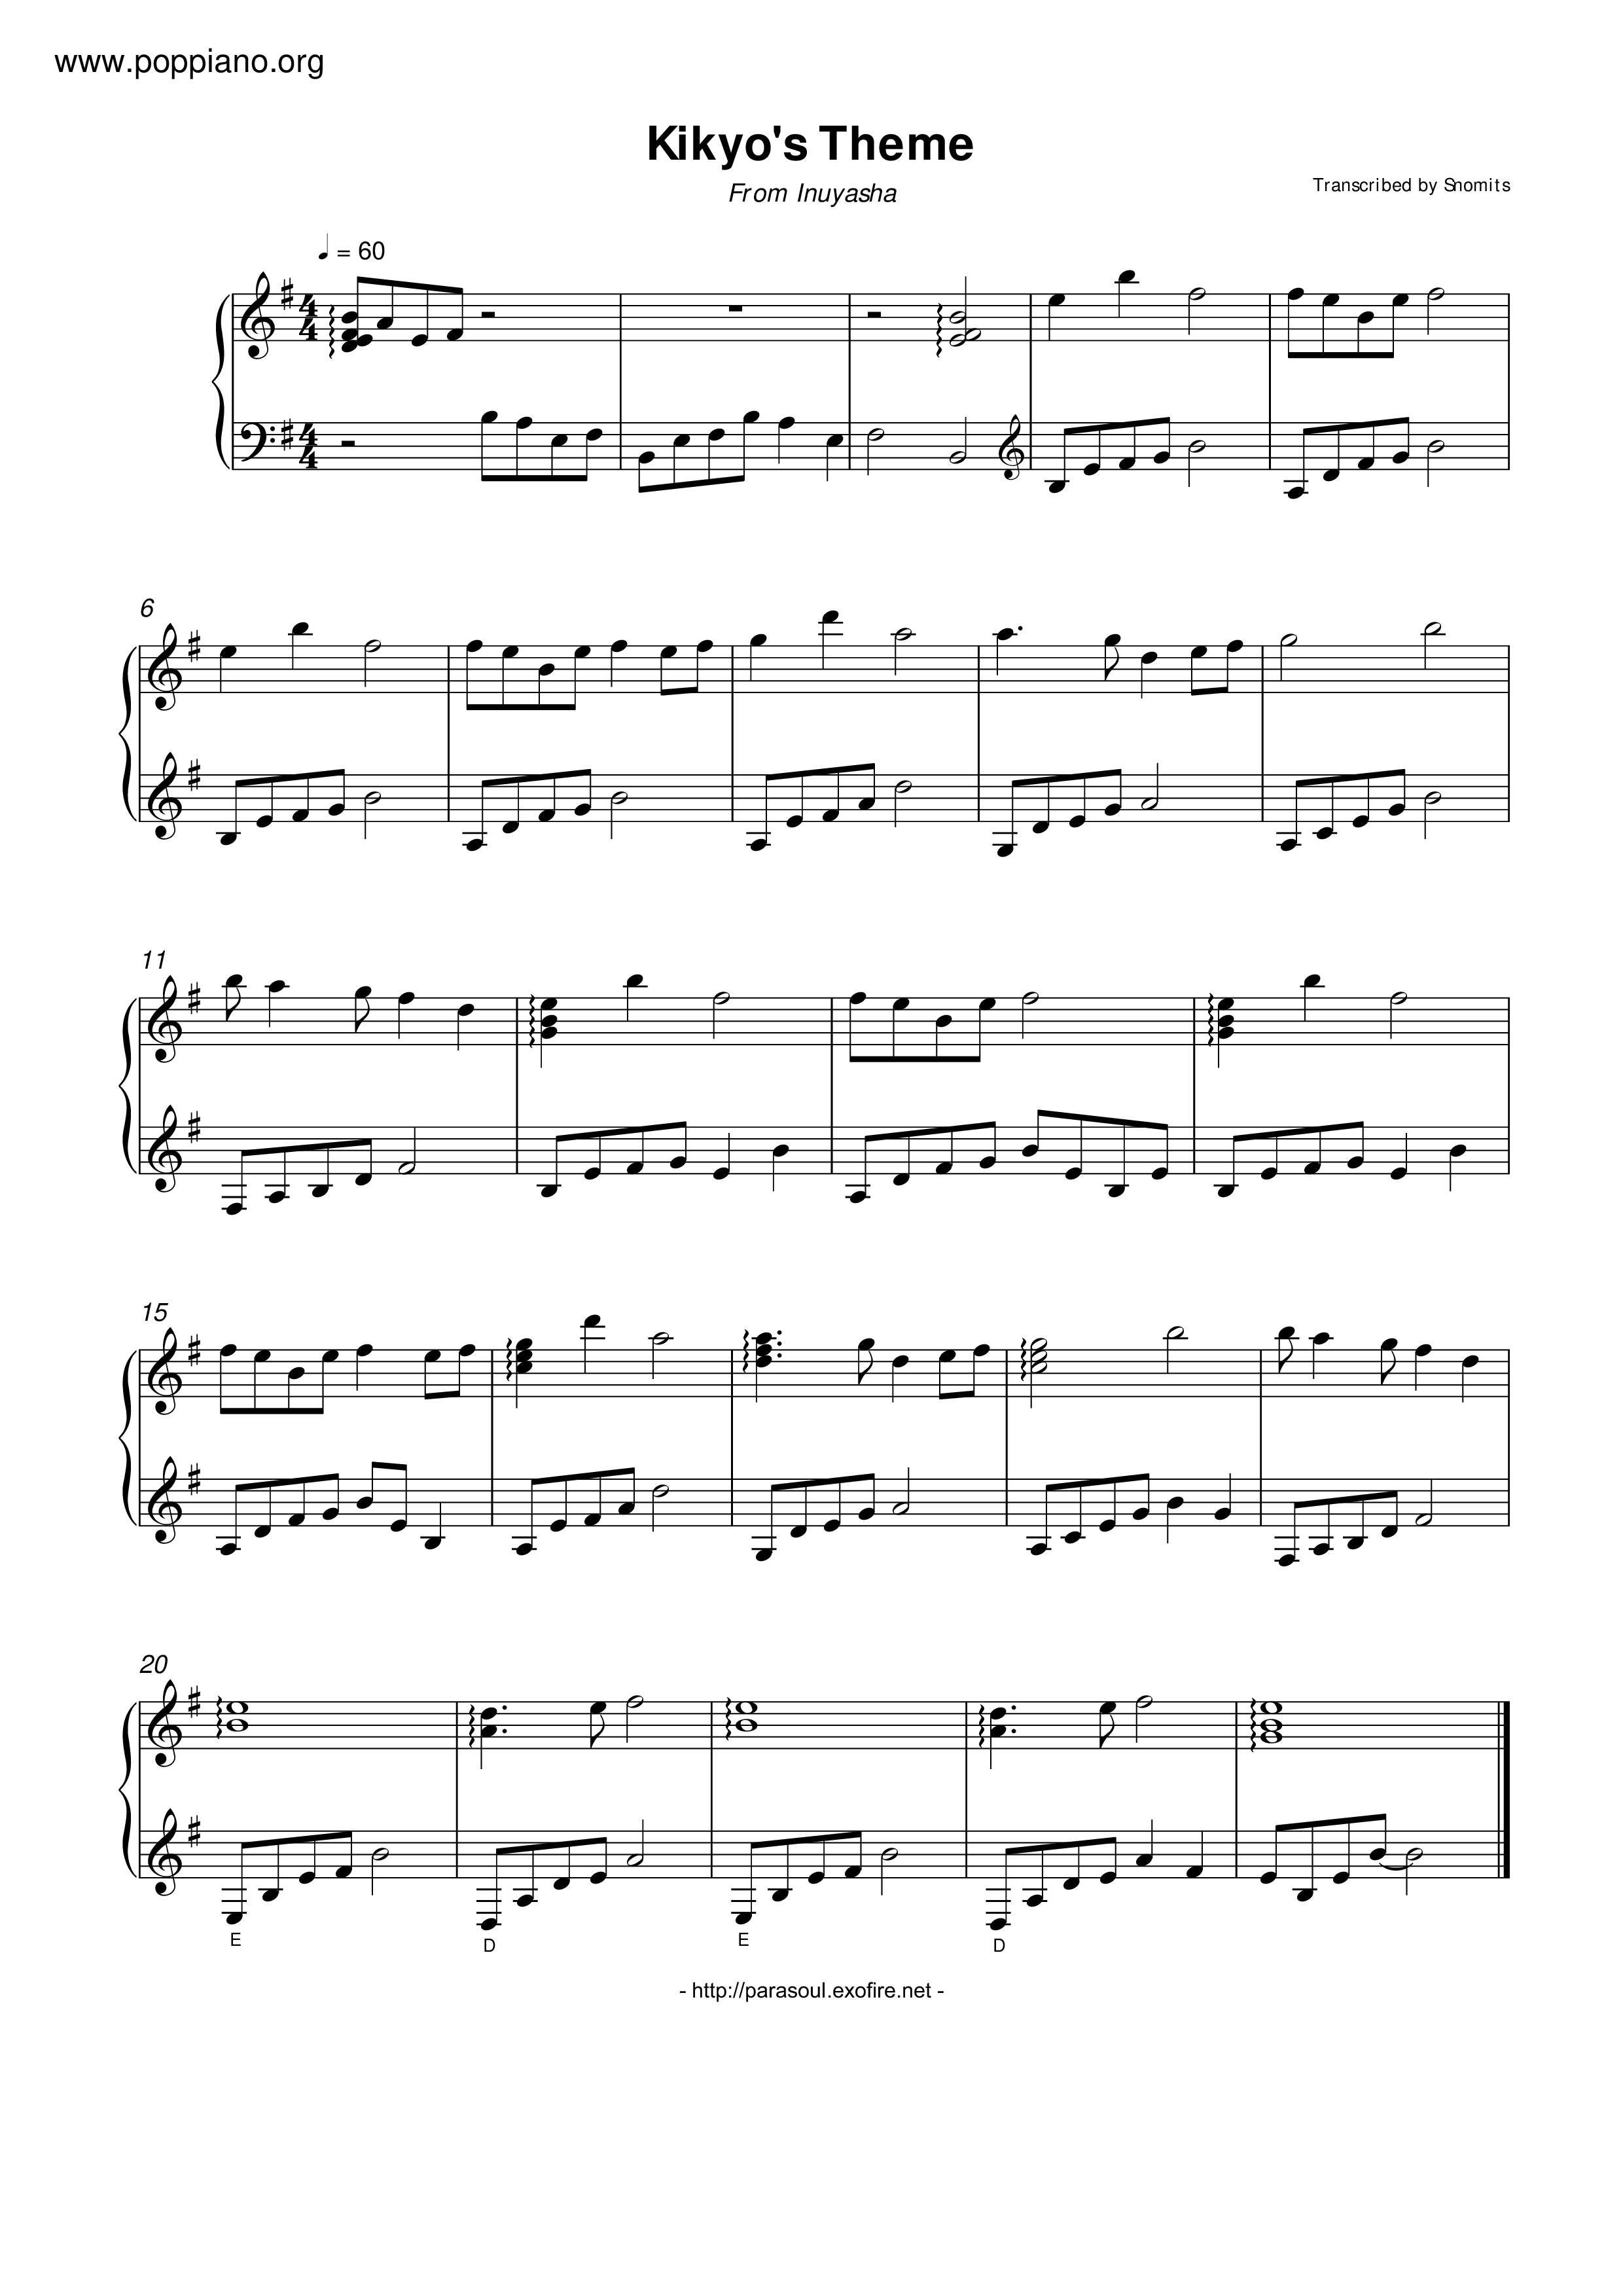 Kikyo's Themeピアノ譜